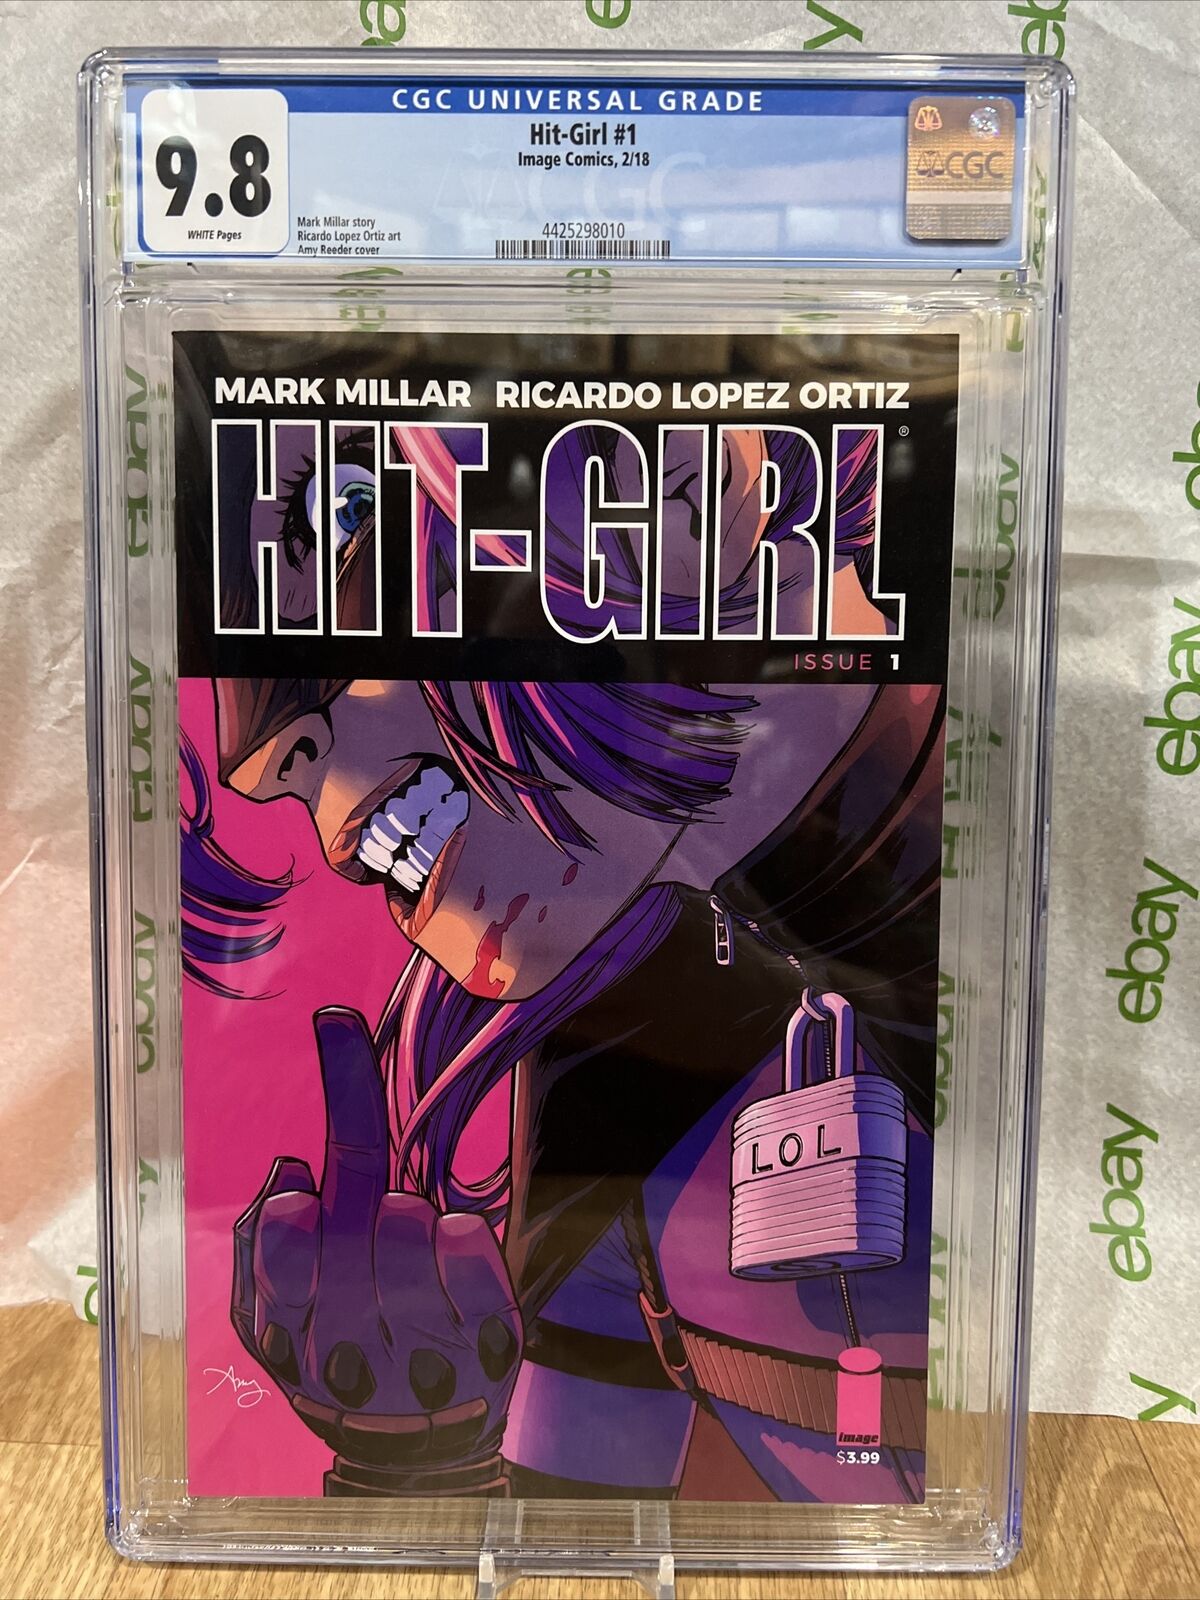 HIT-GIRL #1 Comic Mark Millar Kick Ass Hit Girl Image NM - 2018 Cgc 9.8 Graded